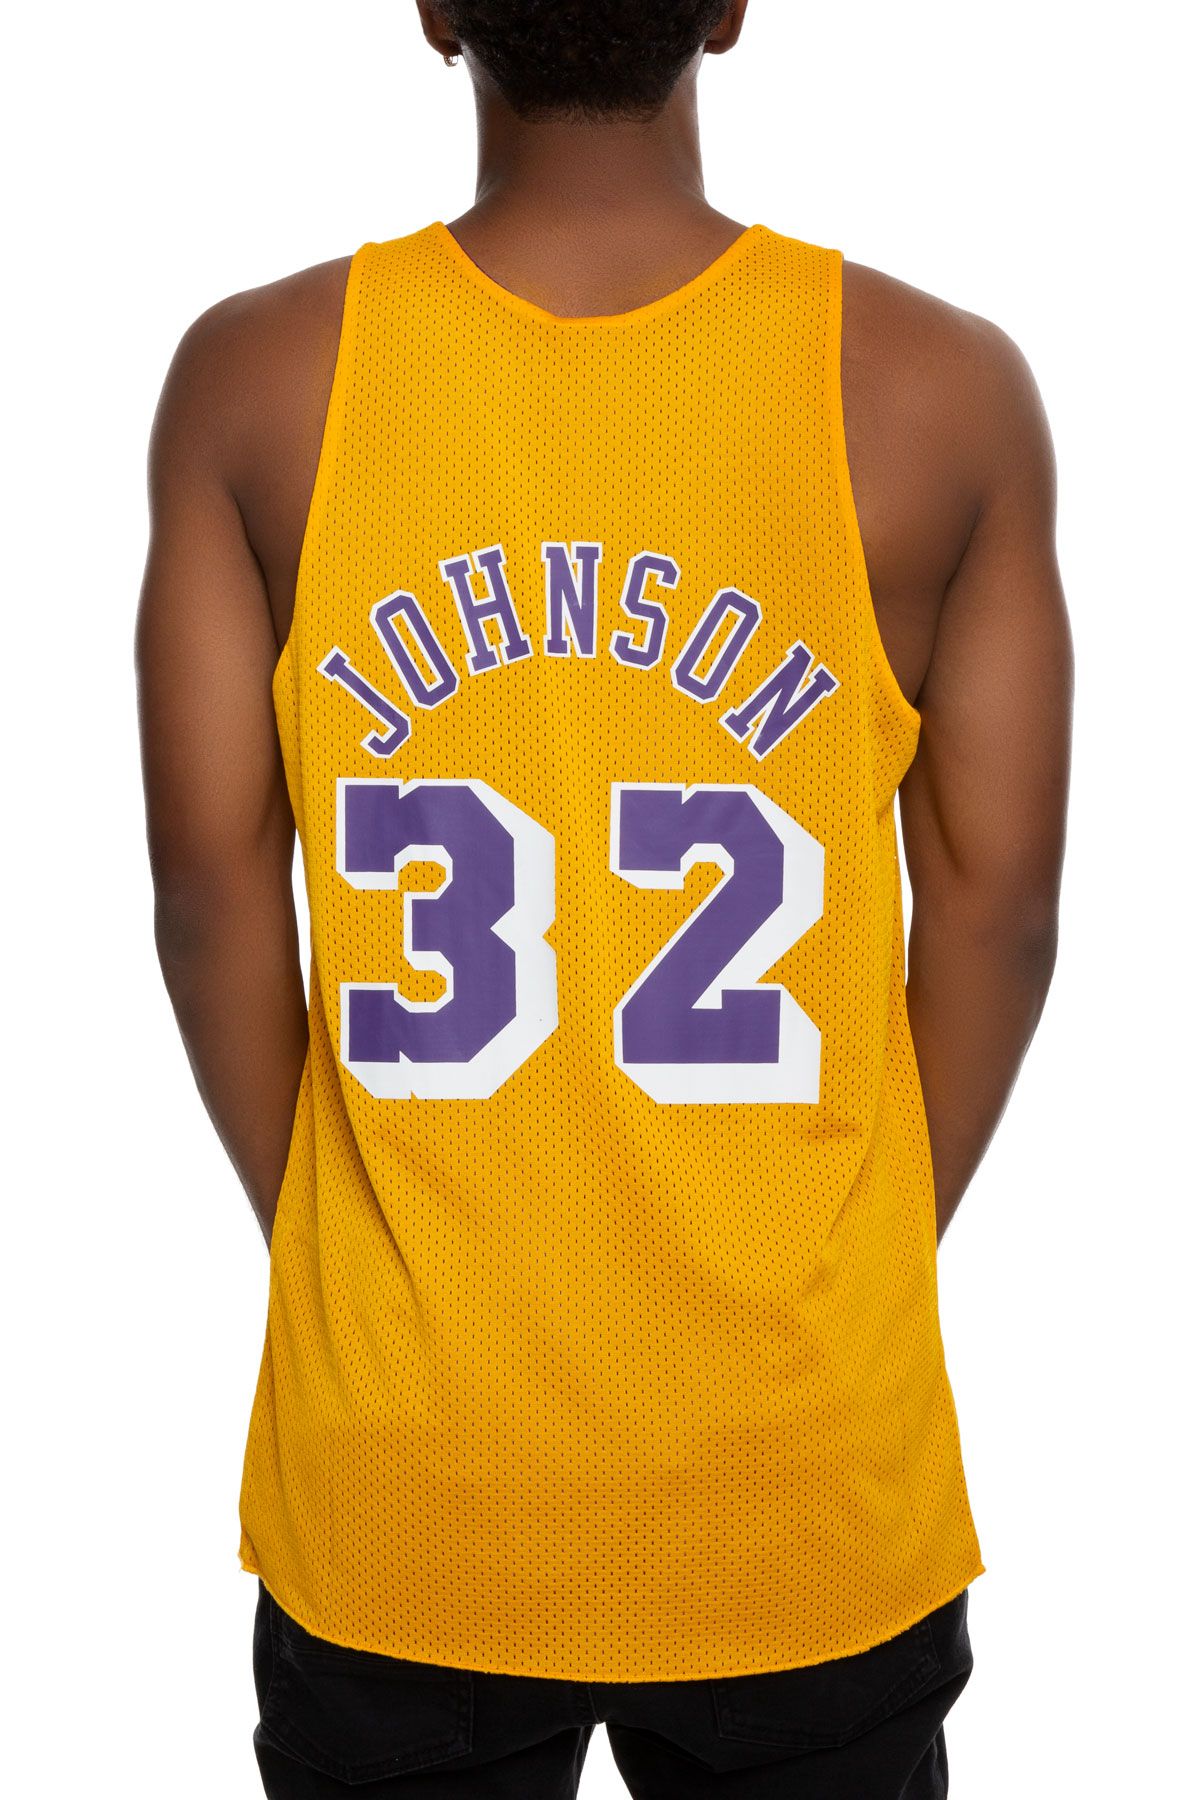 magic johnson jersey, OFF 79%,Cheap!